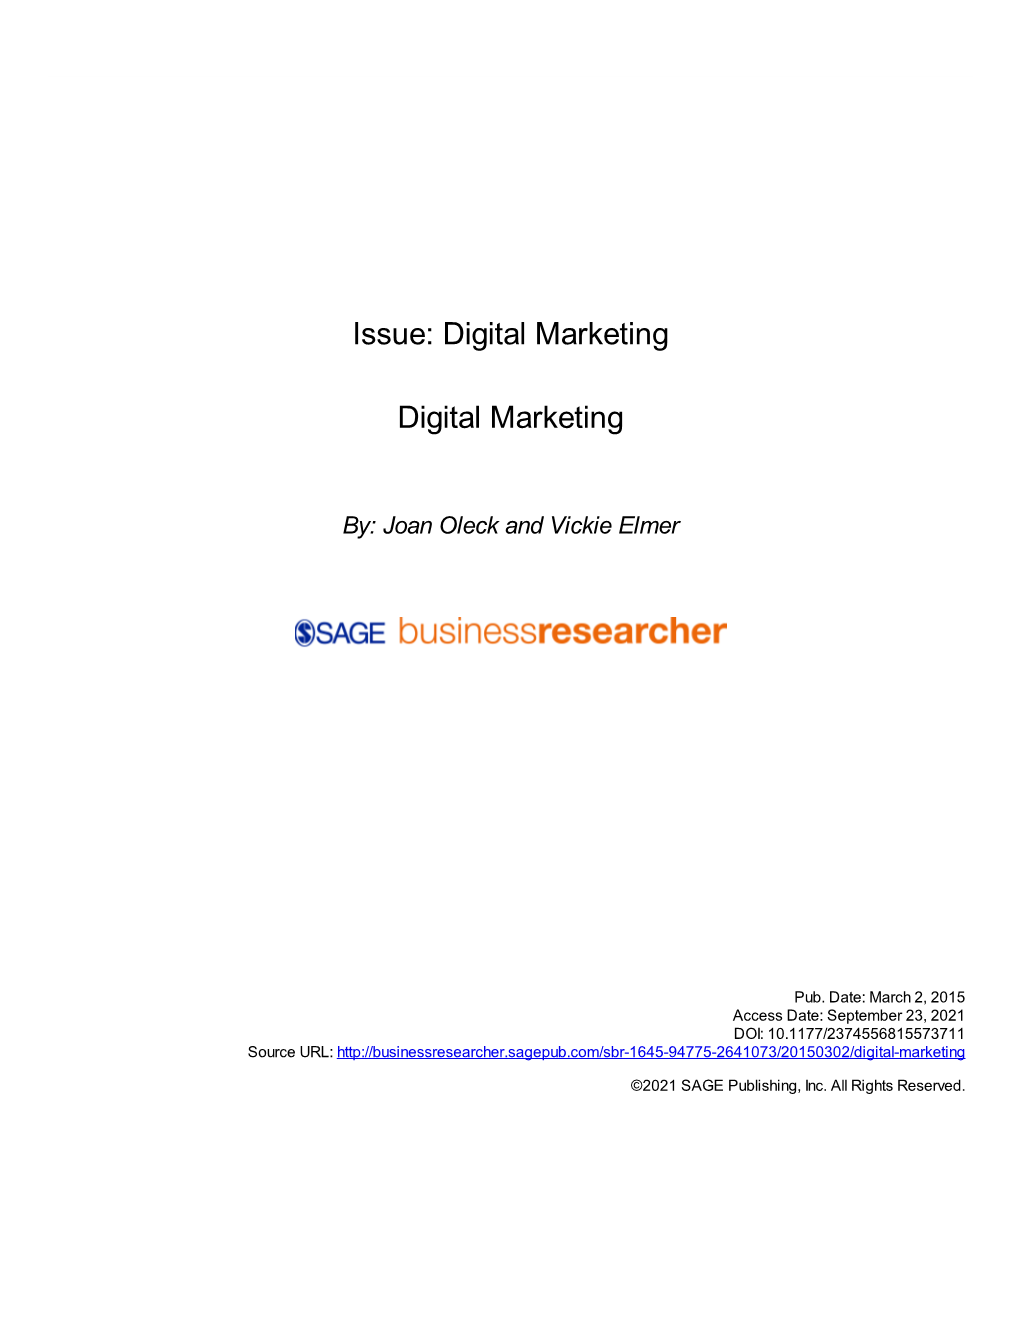 Issue: Digital Marketing Digital Marketing